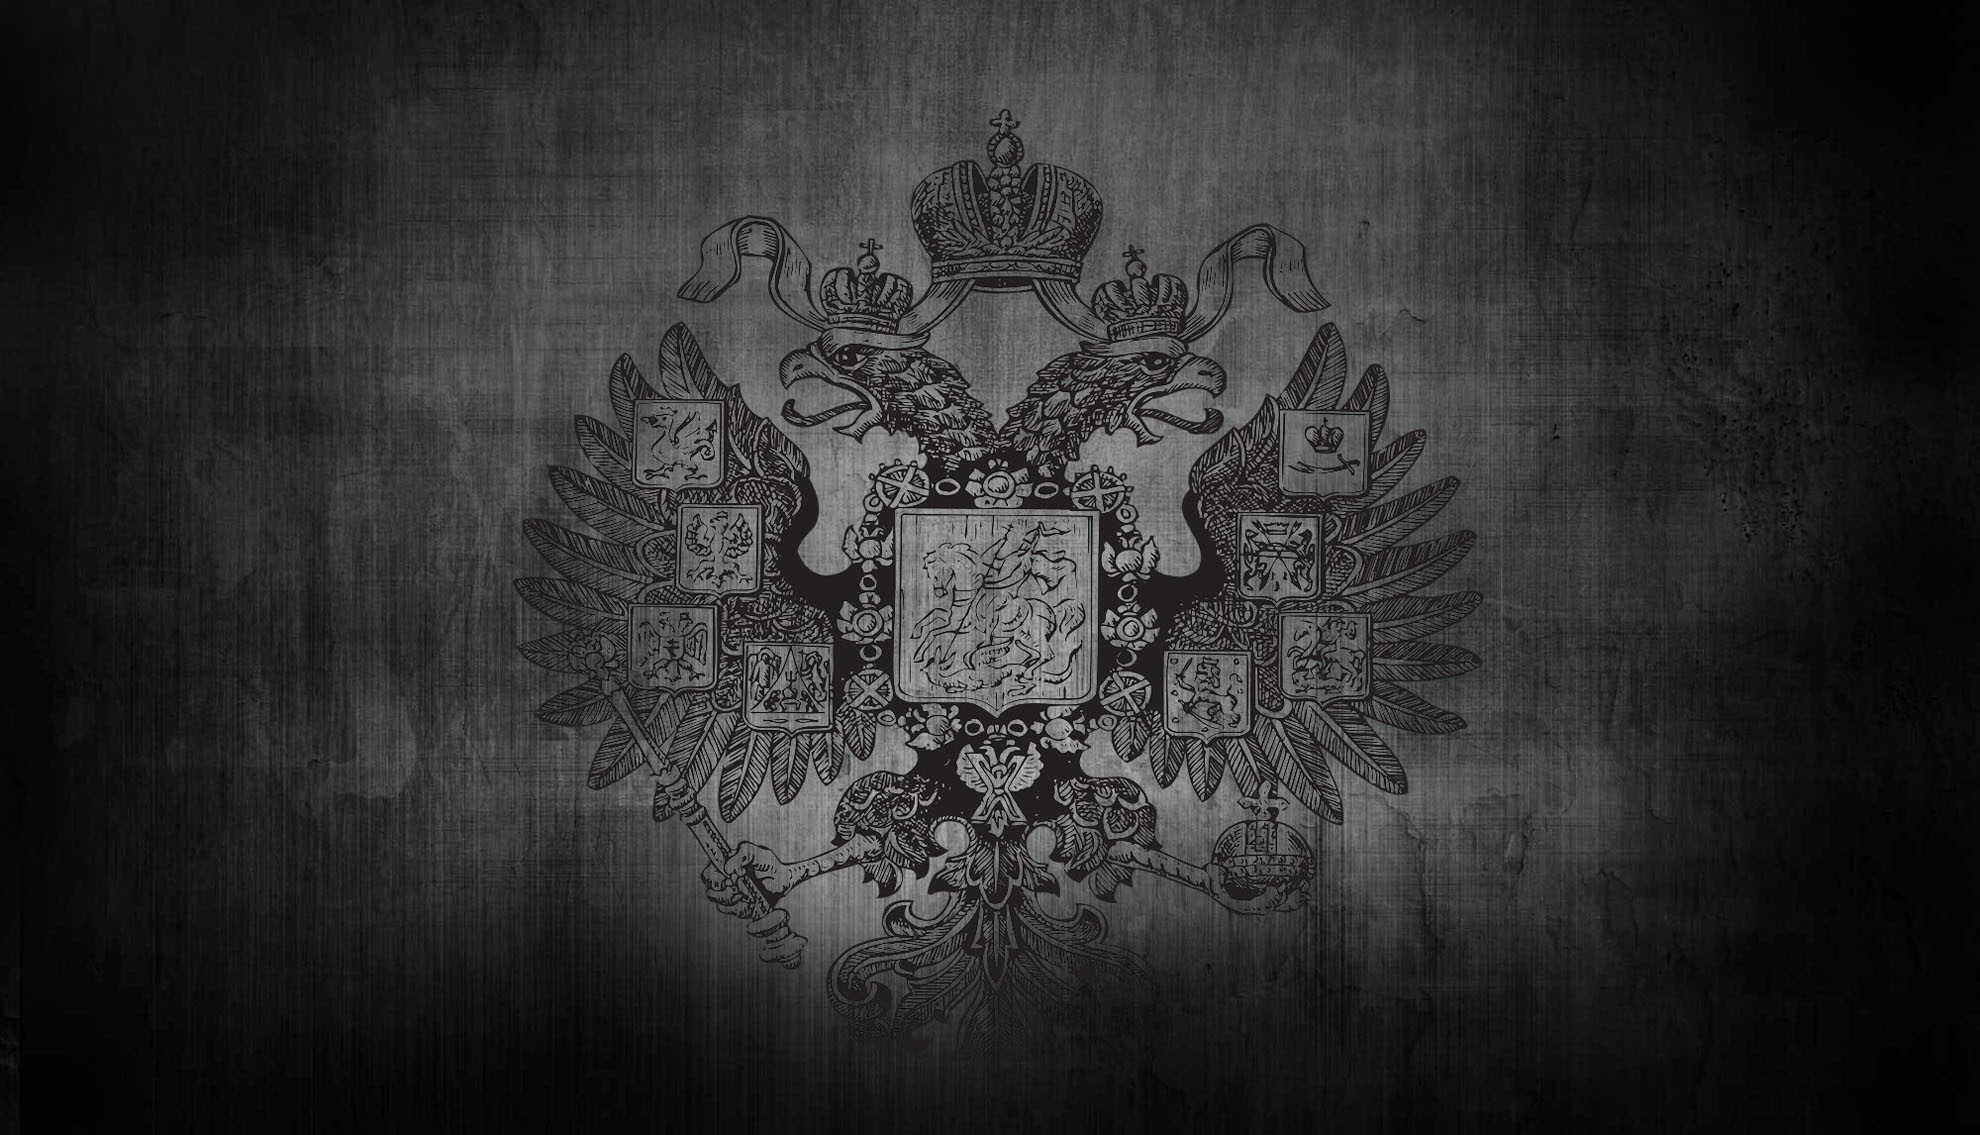 1018589 descargar imagen miscelaneo, ruso, escudo de armas de rusia: fondos de pantalla y protectores de pantalla gratis